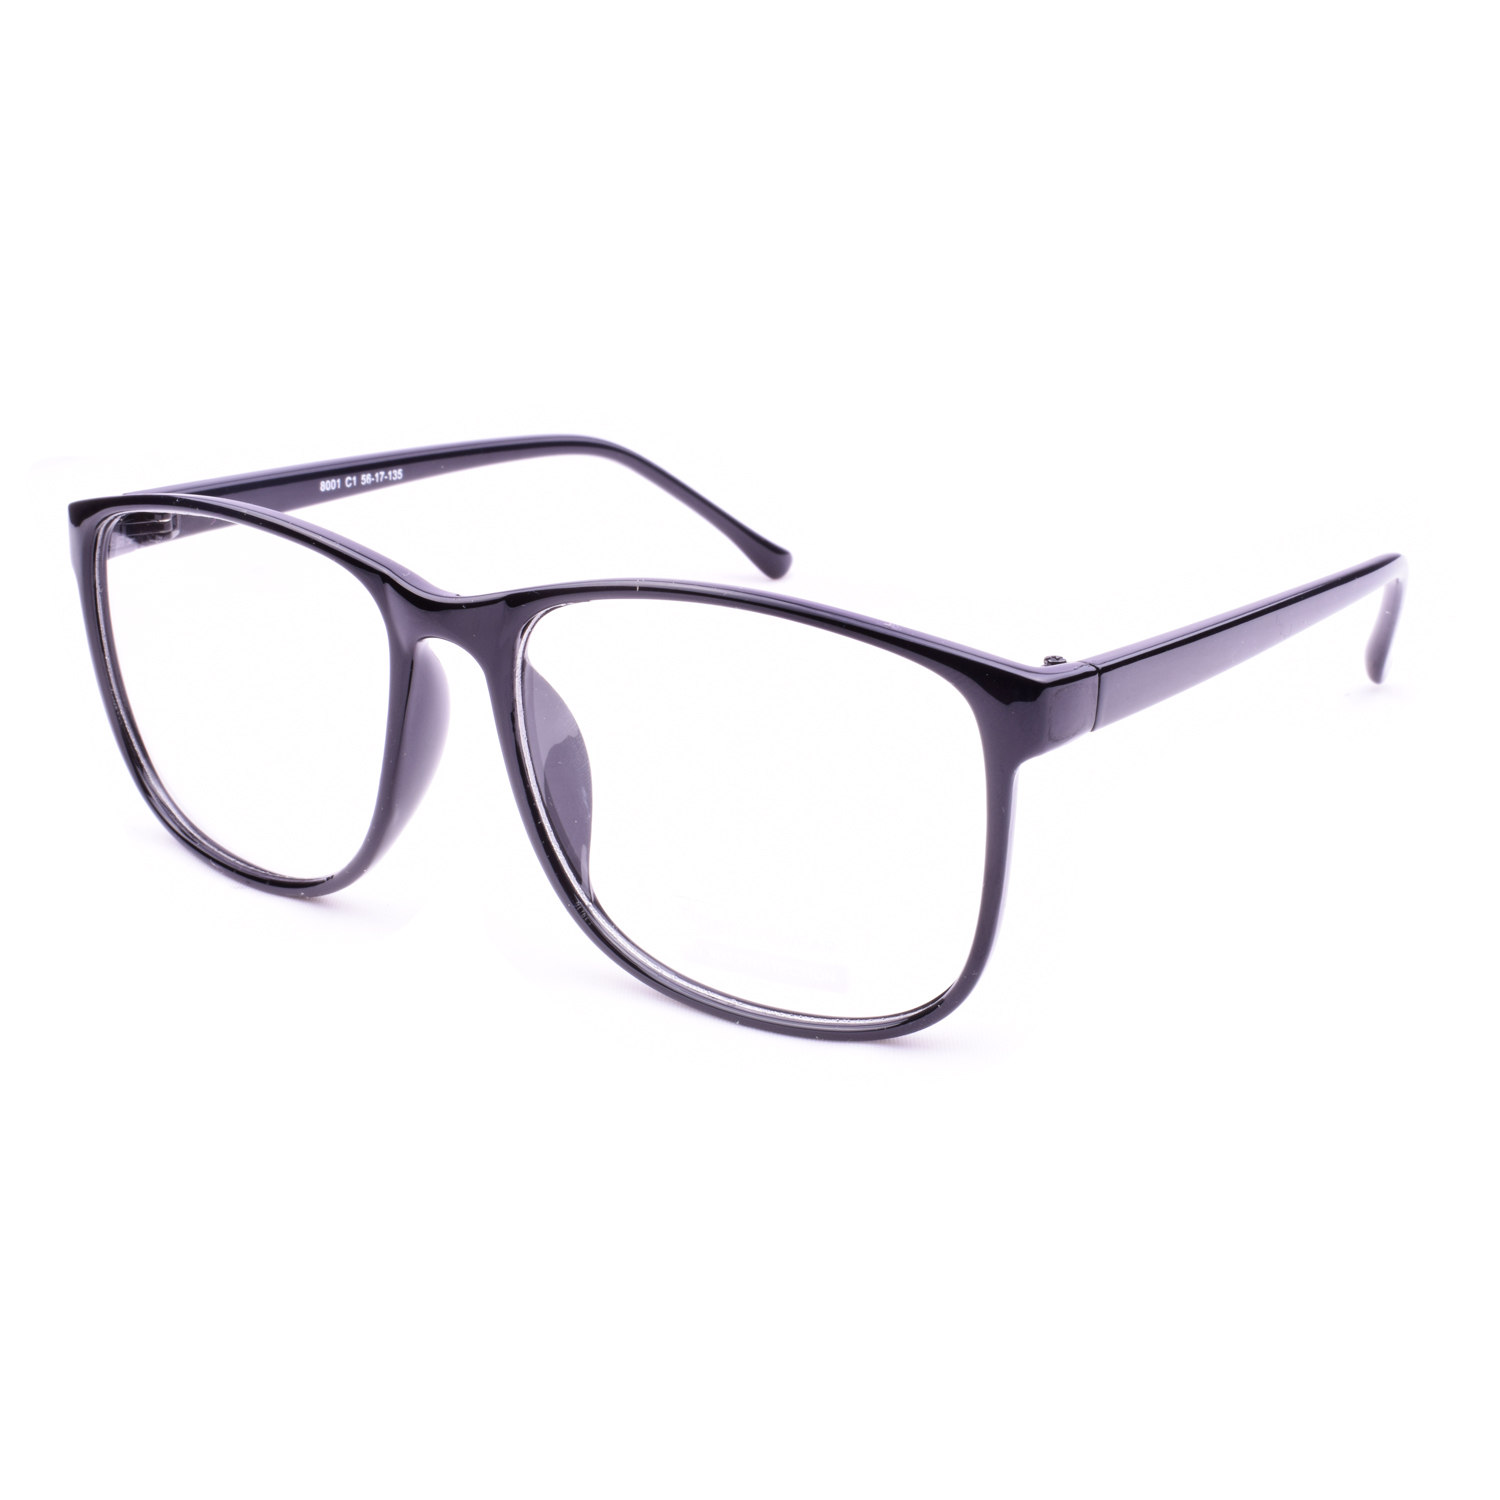 Buy Tiger Eyewear Black Full Rim Unisex Wayfarer Spectacle Frame Online ...